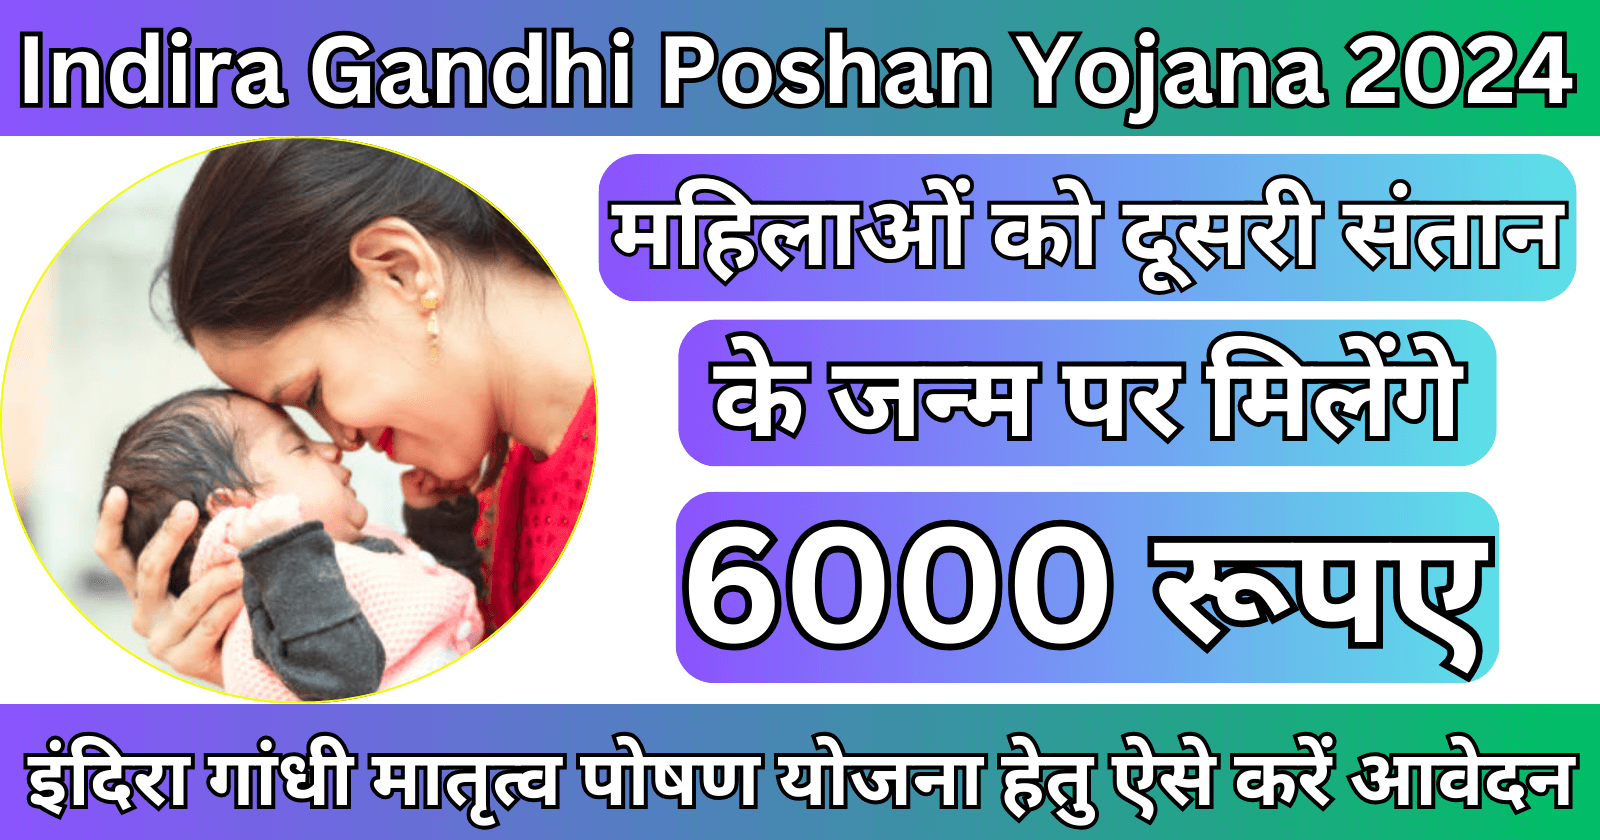 Indira Gandhi Poshan Yojana 2024